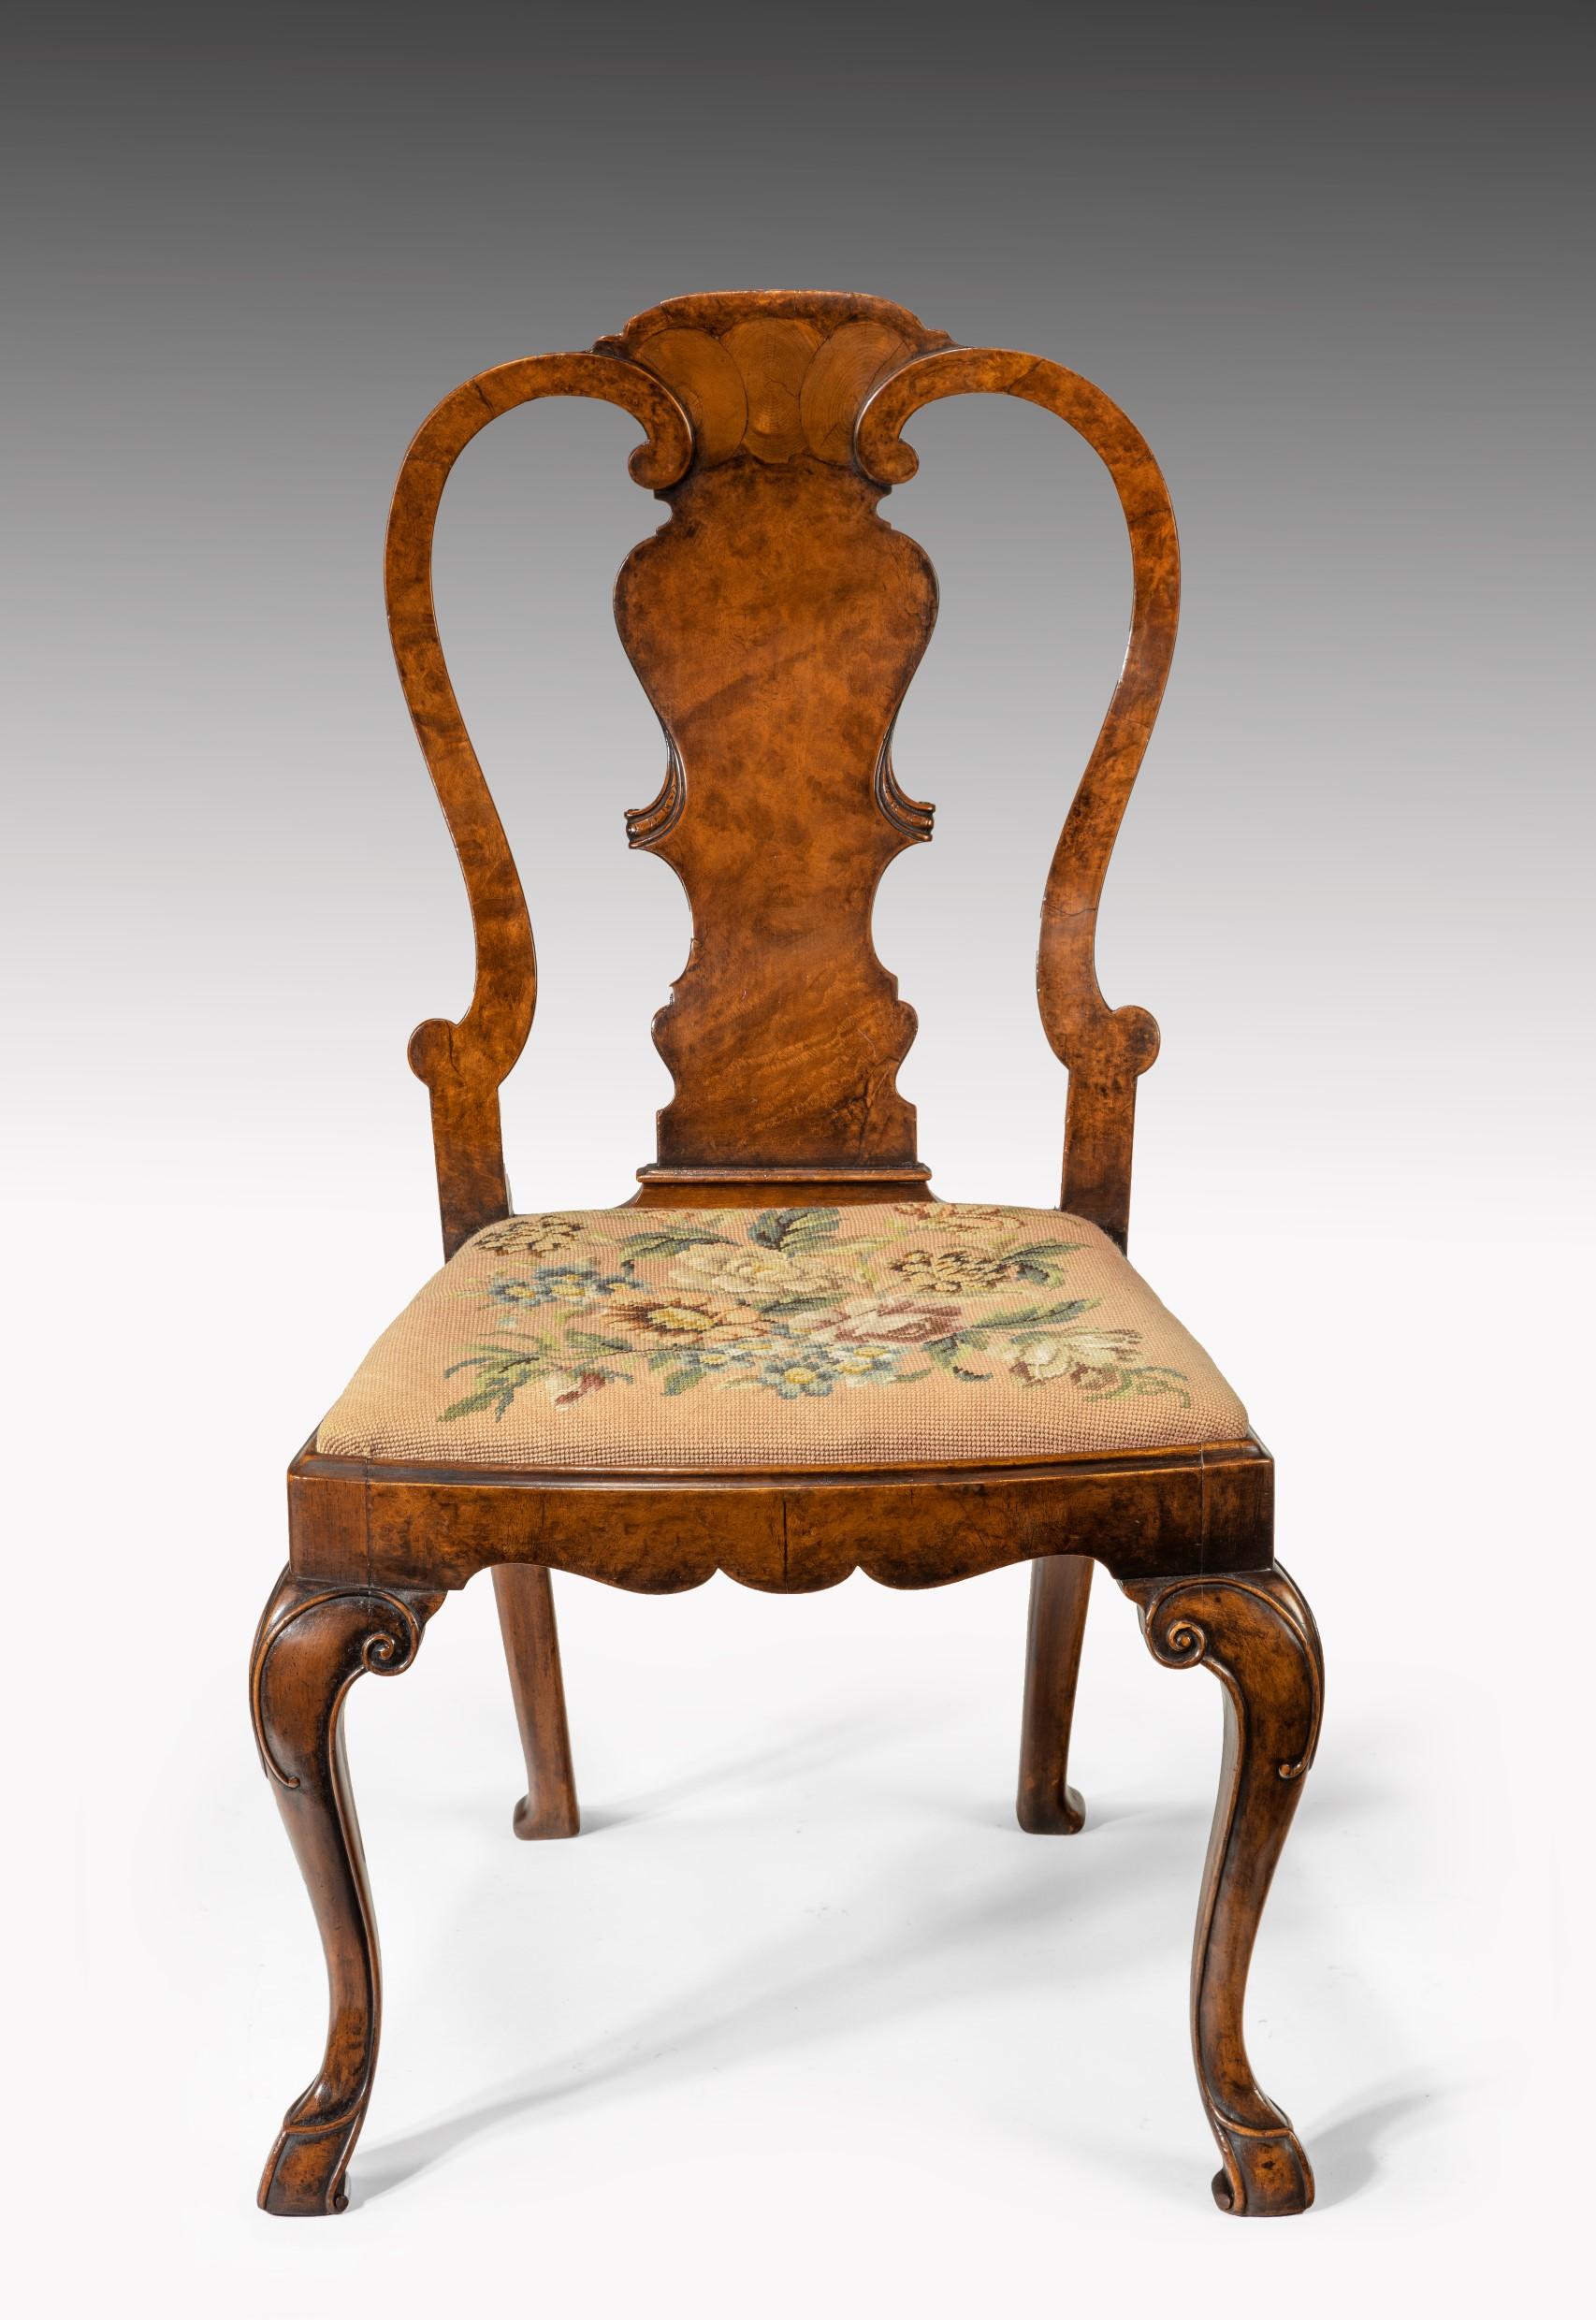 George I Quality 19th Century Walnut Side Chair with Original Needlework Seat